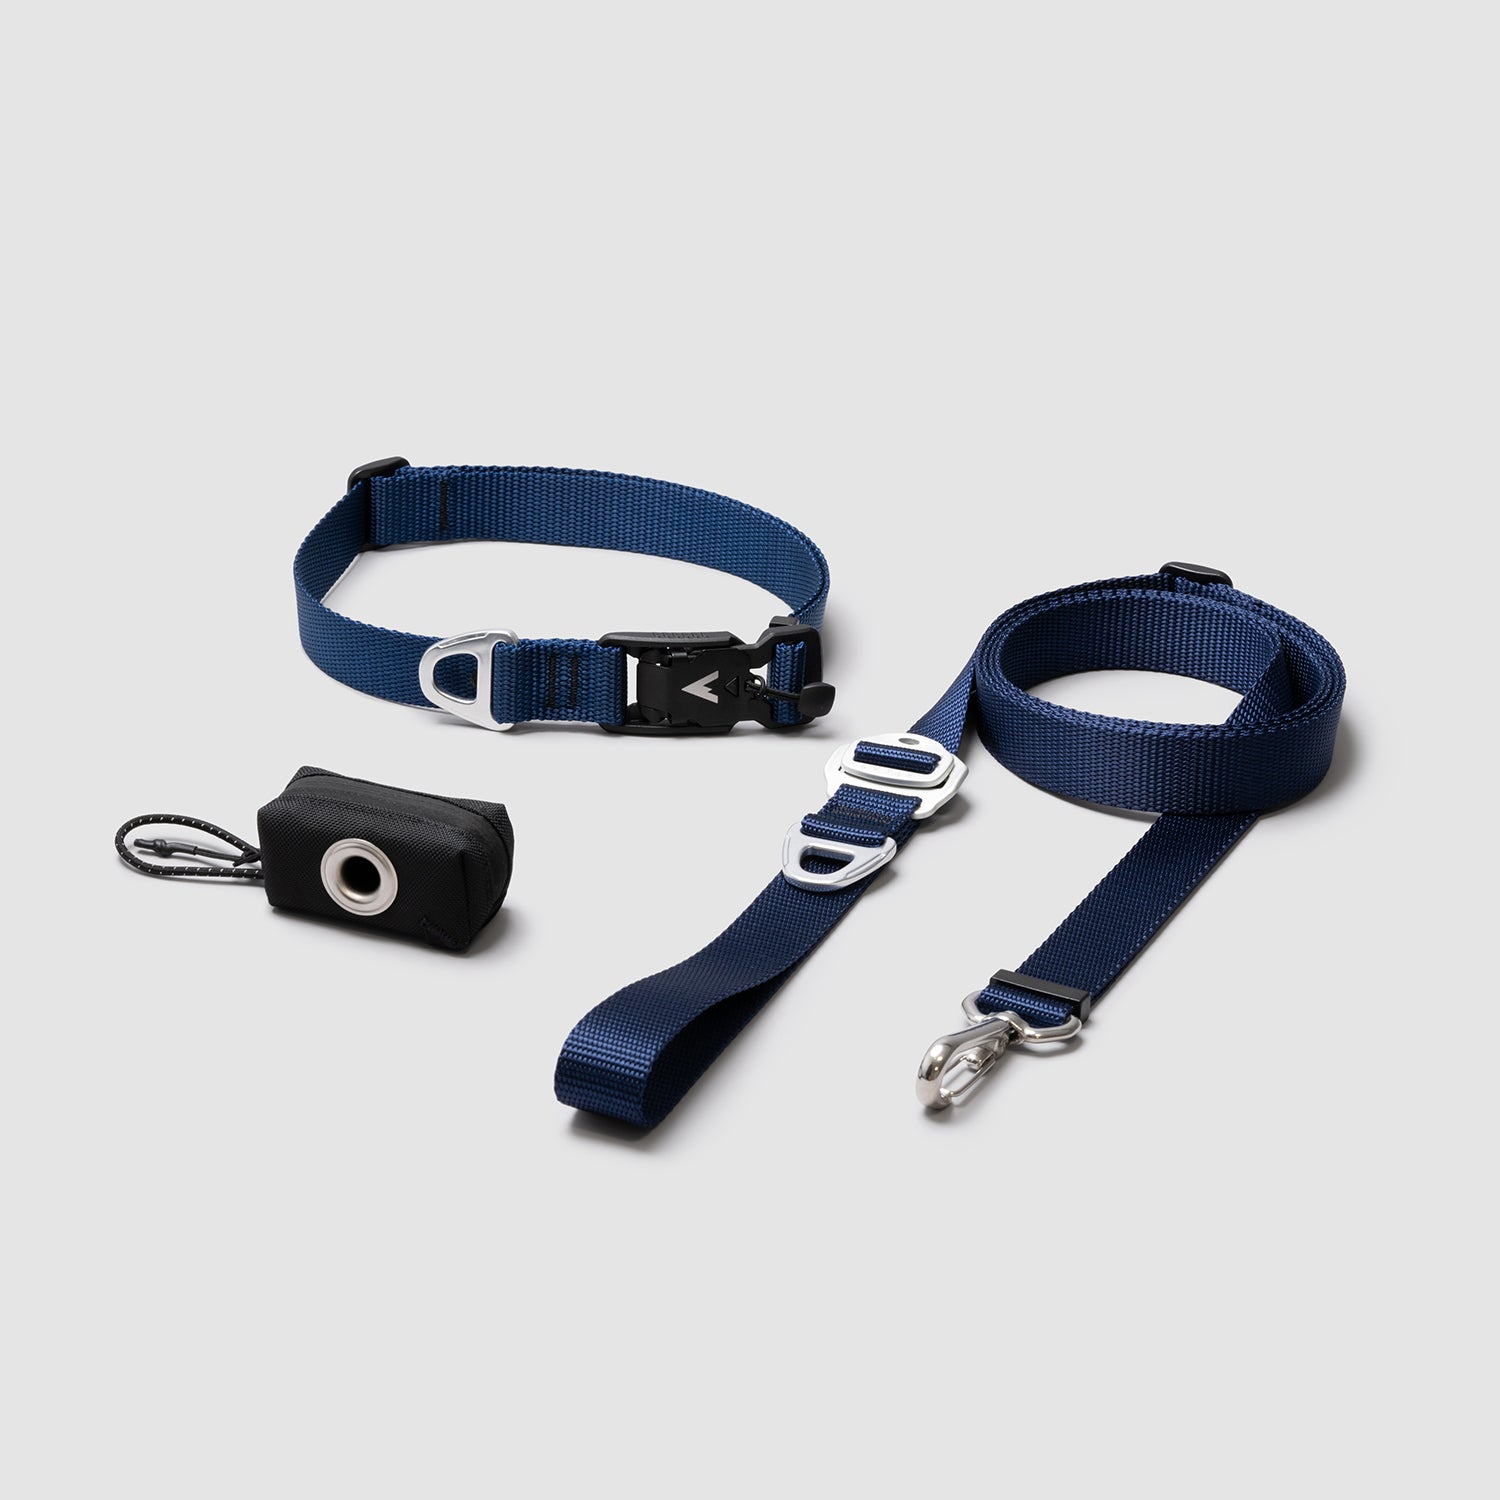 atlas-pet-company-lifetime-lite-kit-with-lifetime-warranty-dog-leash-collar-and-pouch-4.jpg